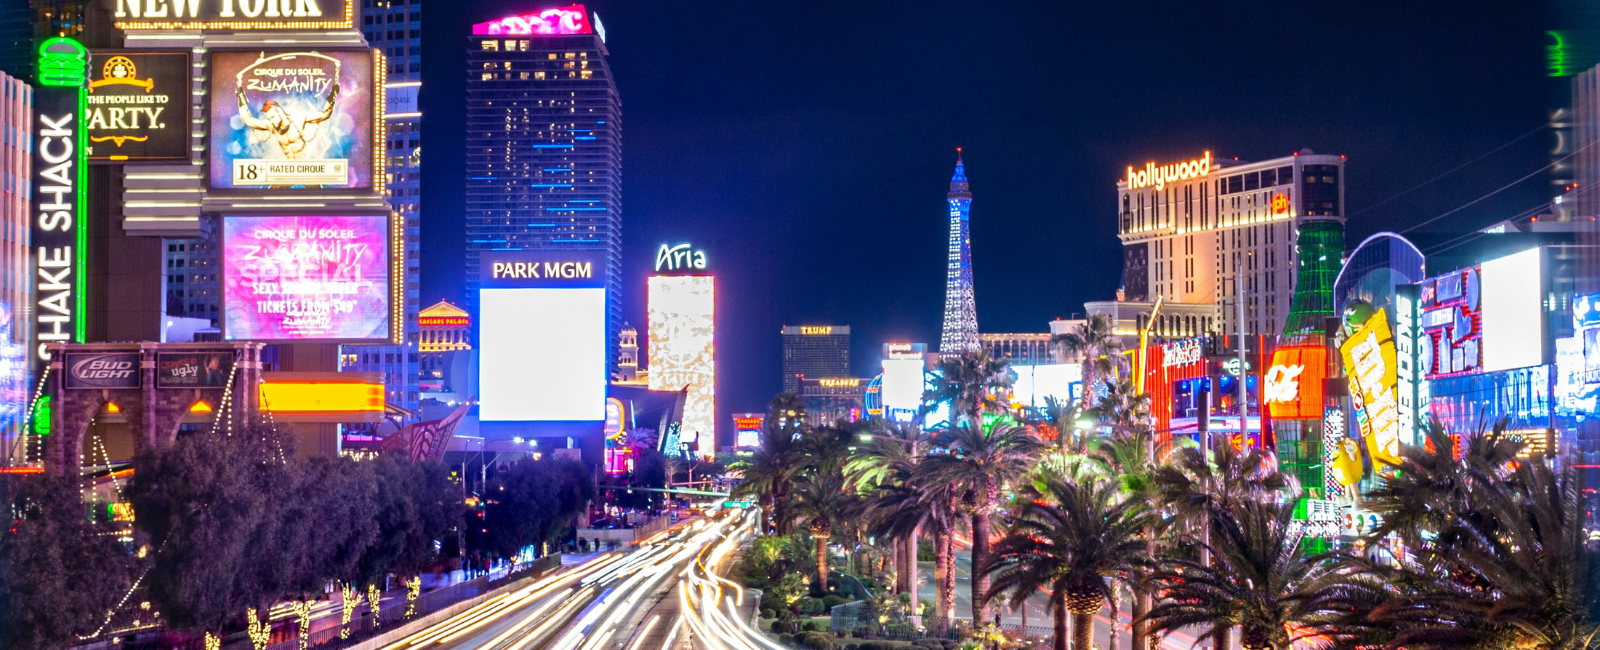 Las Vegas strip lights at night